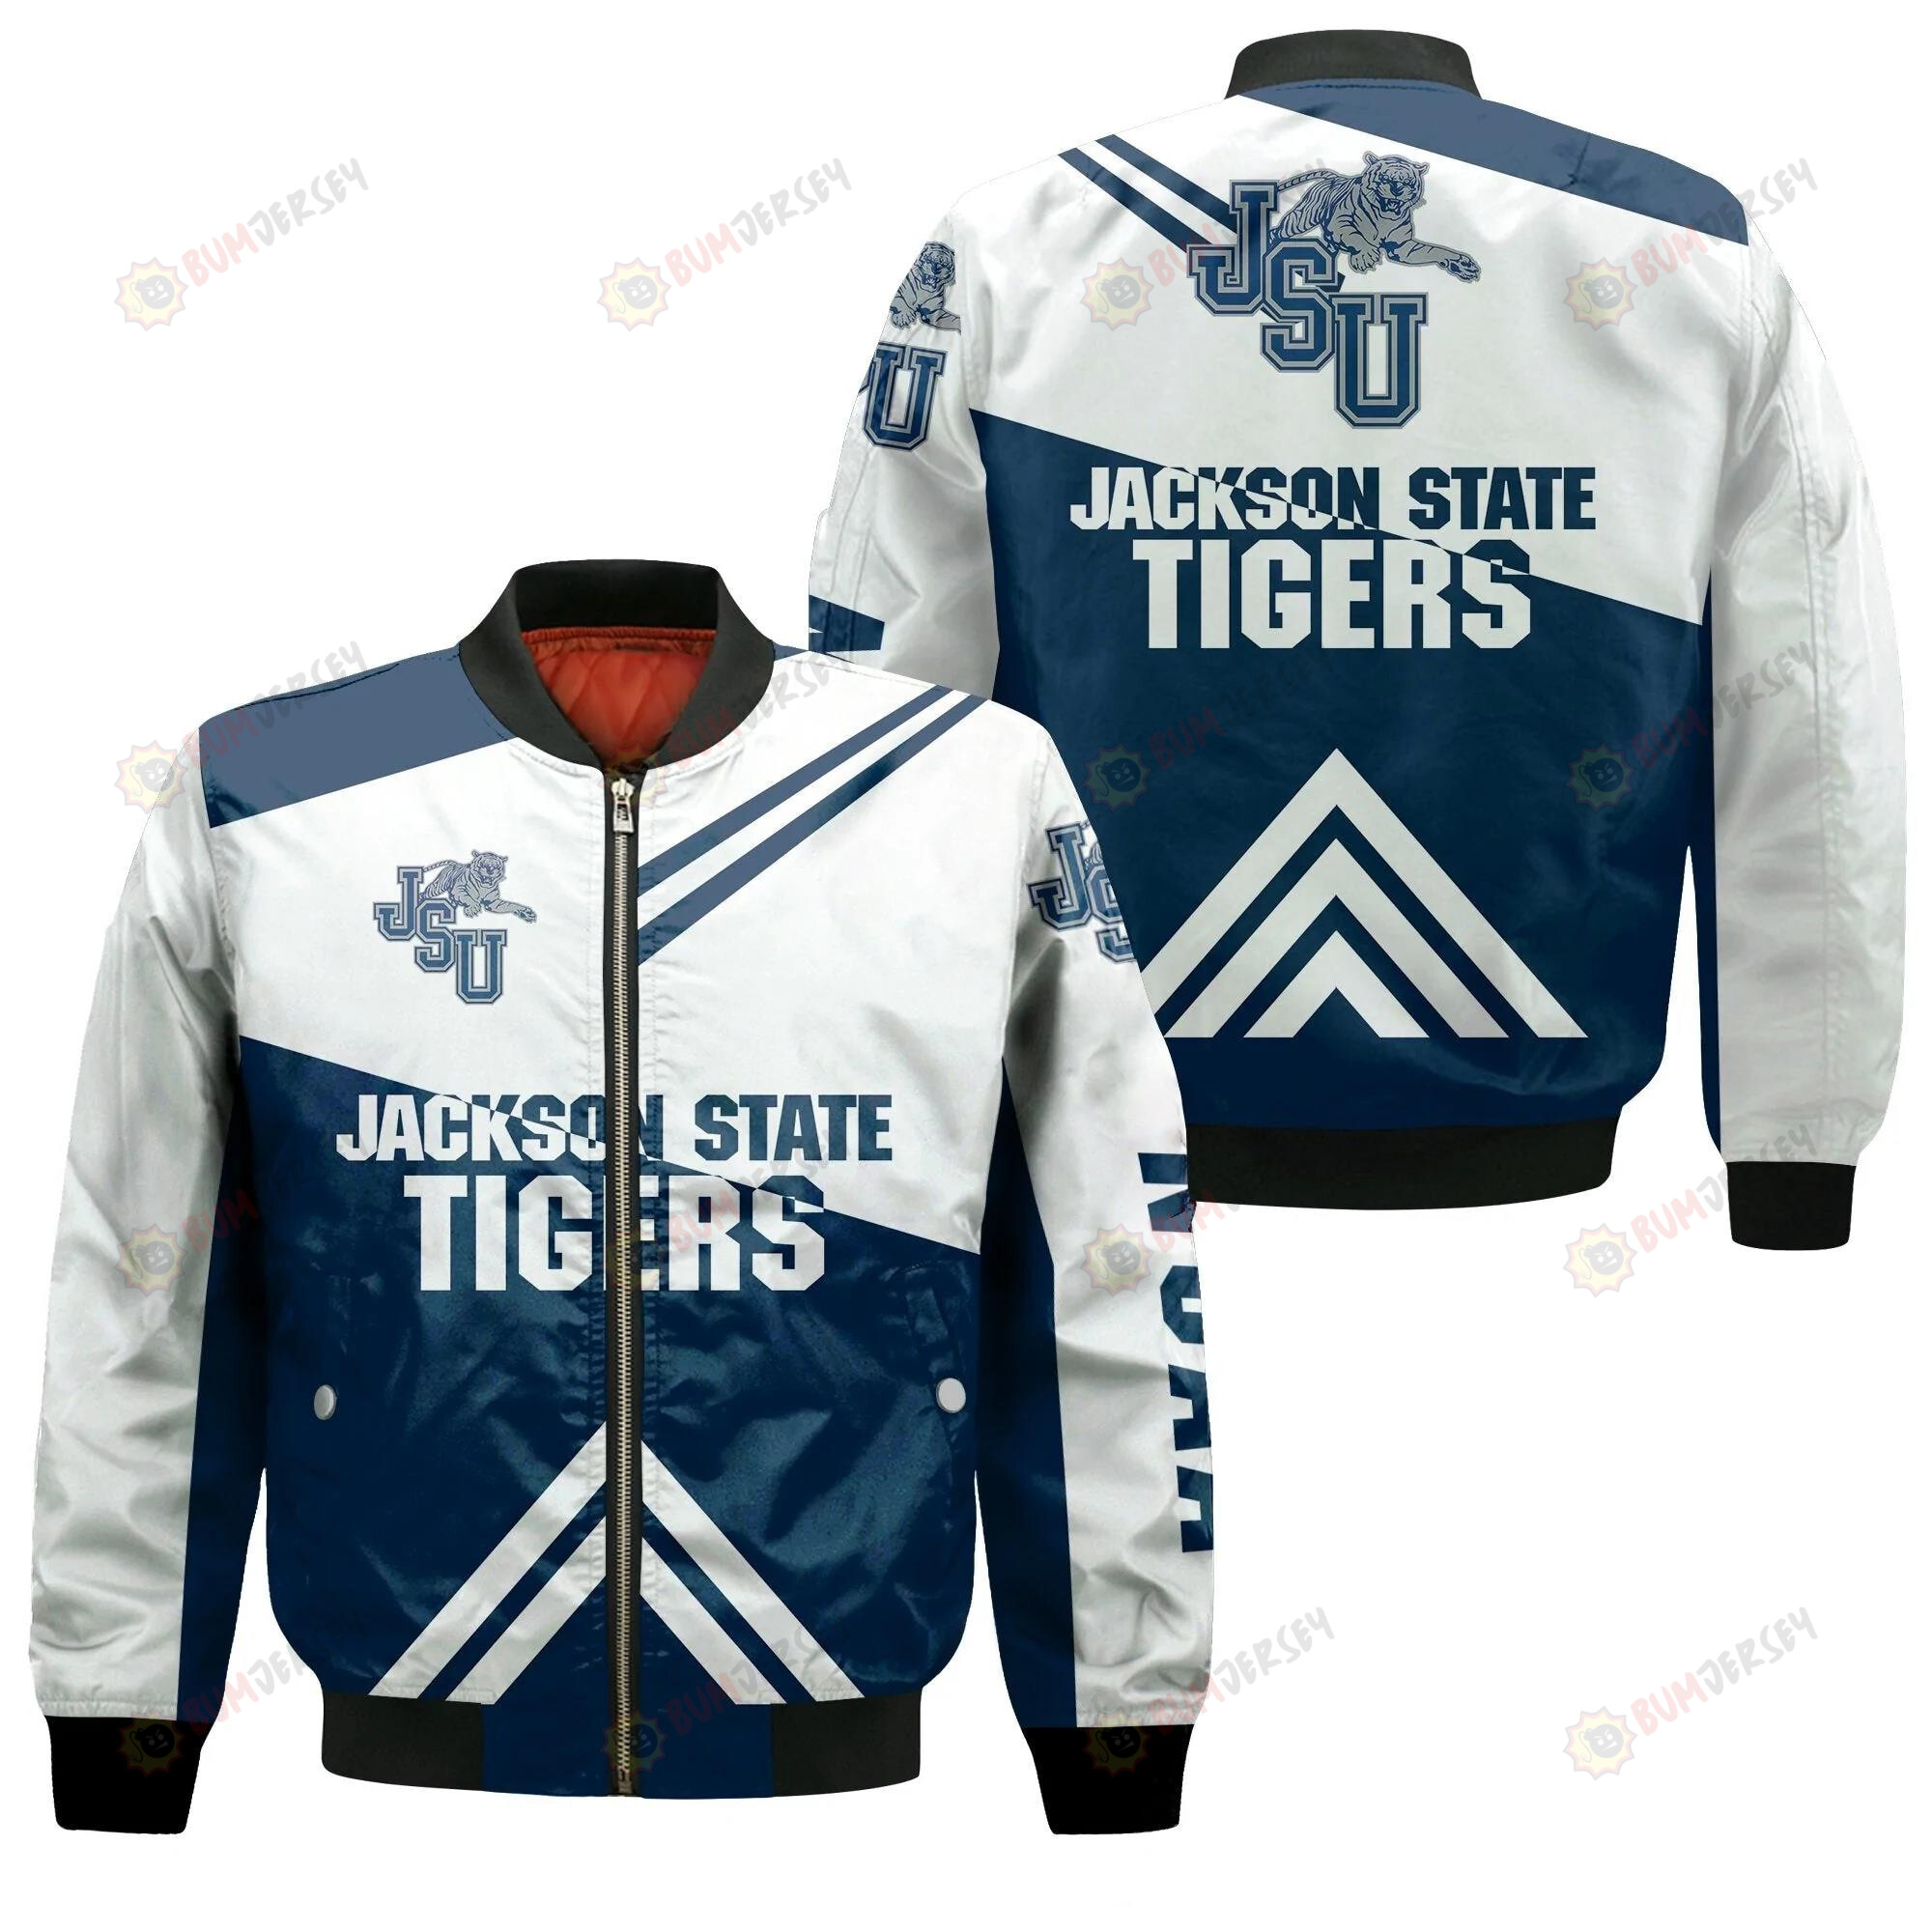 Jackson State Tigers Football Bomber Jacket 3D Printed - Stripes Cross Shoulders